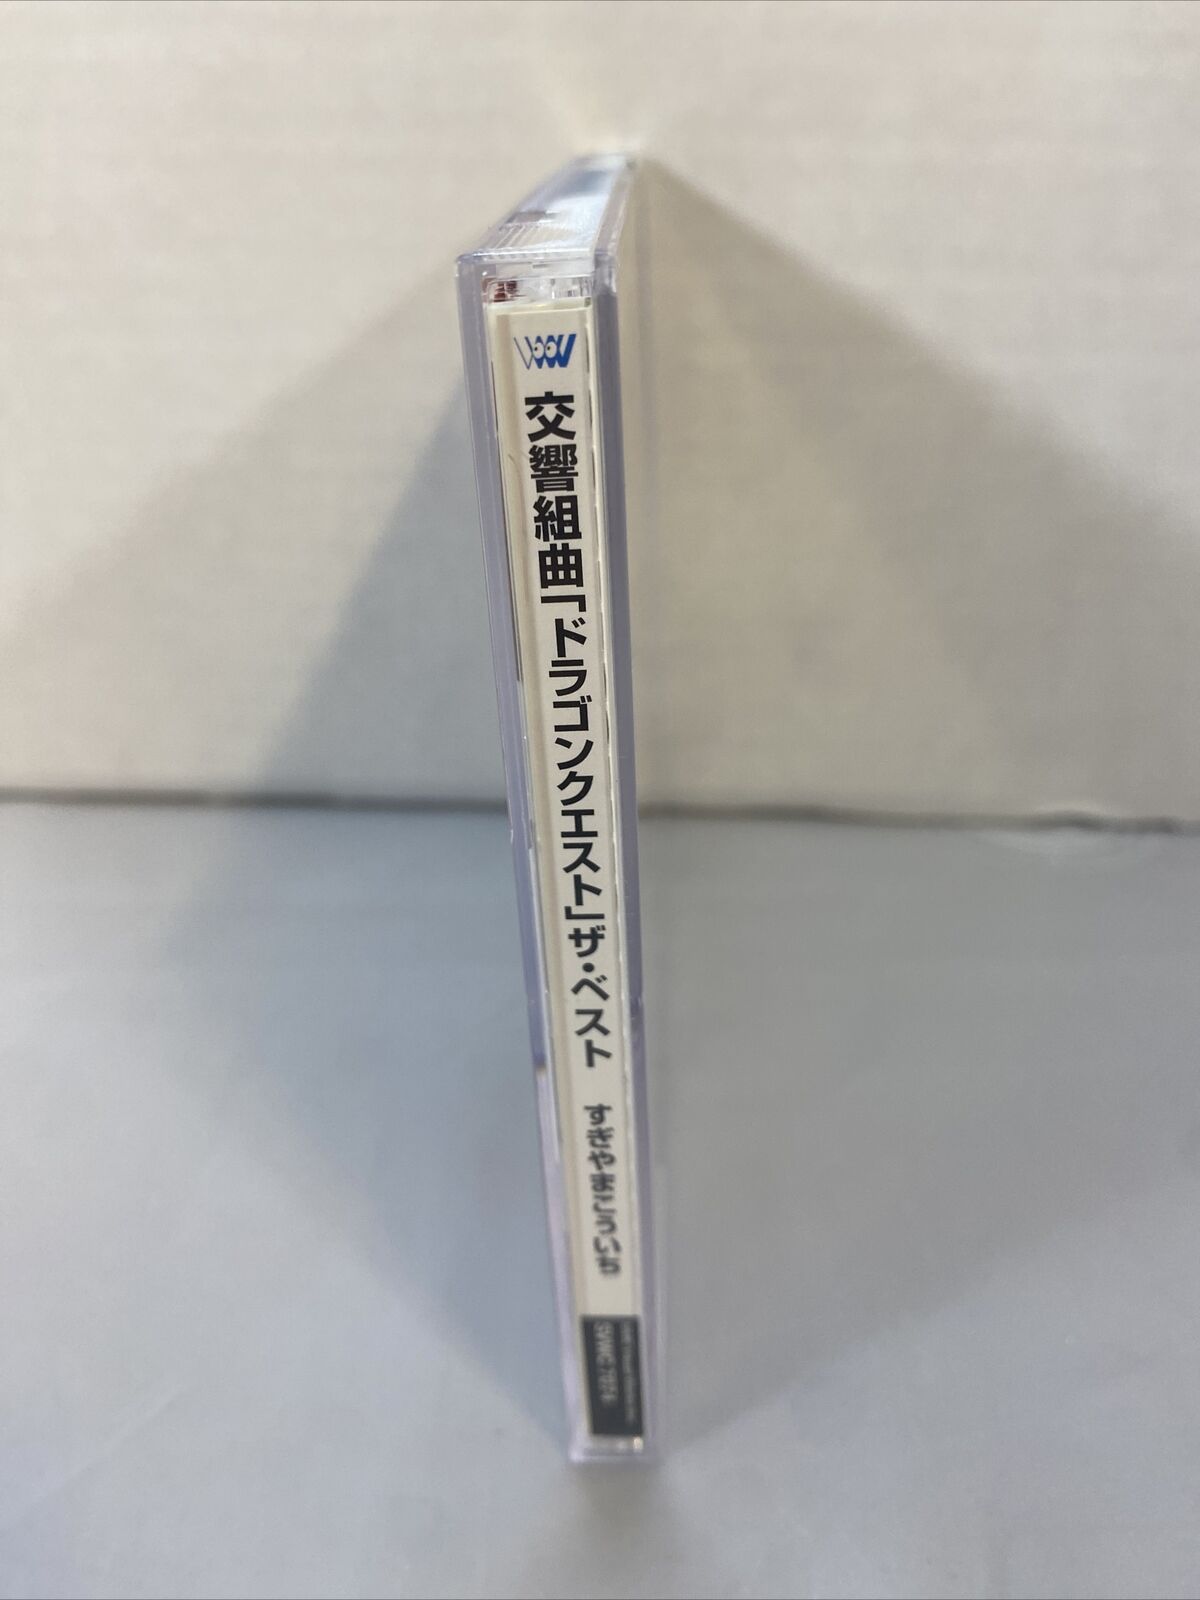 (CD) Dragon Quest: The Best - Ost / Japan Import / SVWC 7074 / Soundtrack w/ obi